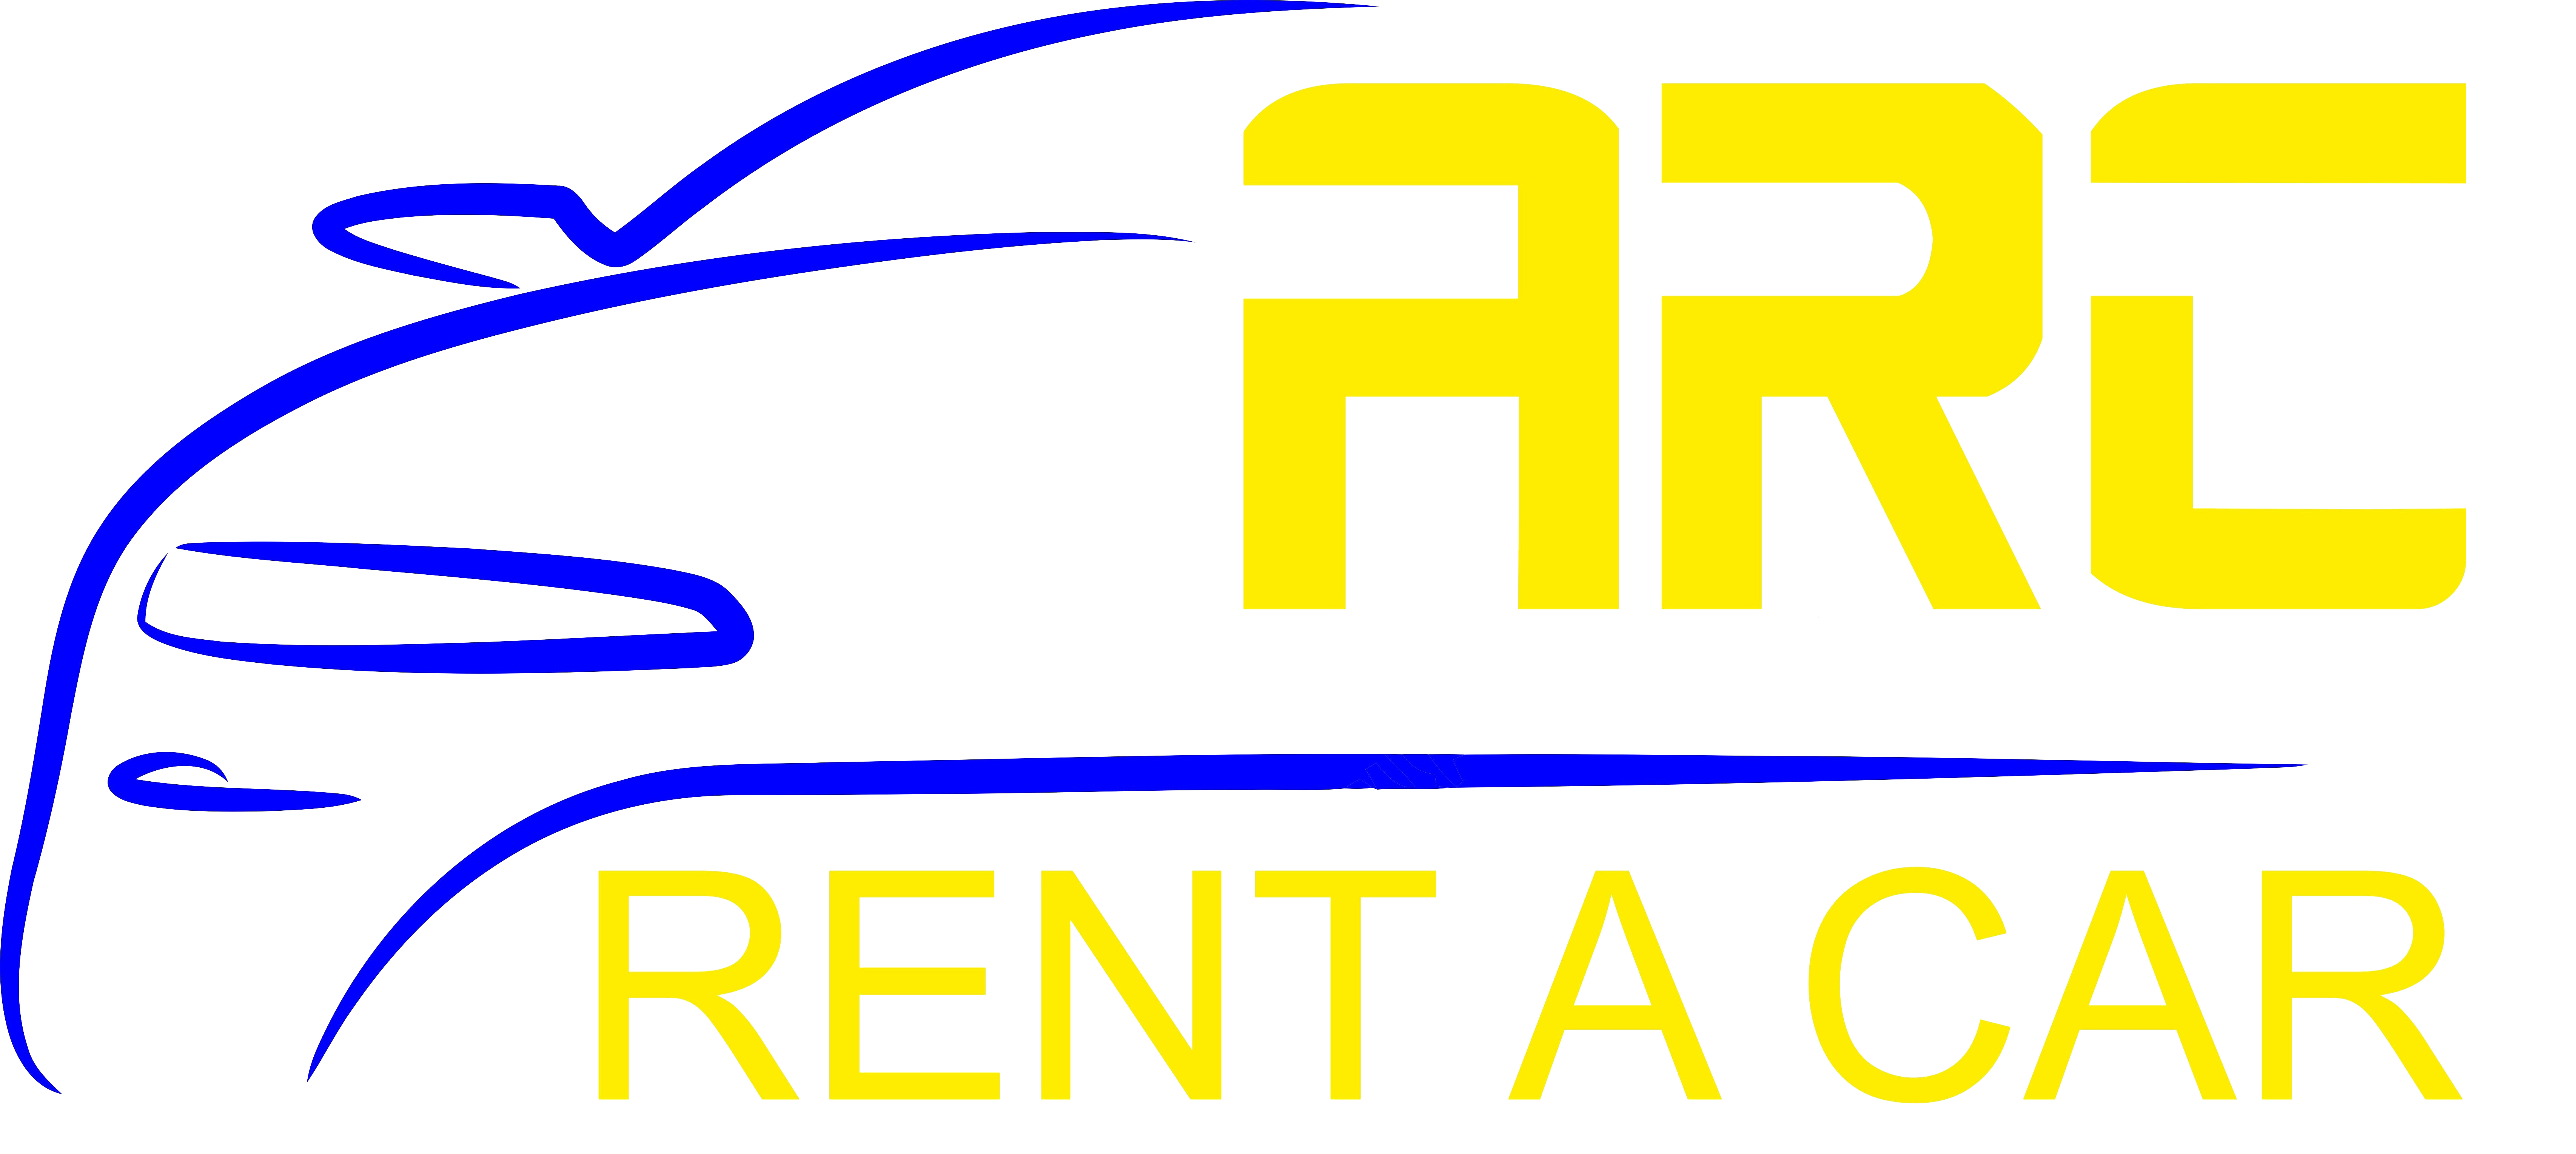 ARC RENT A CAR by ANARENT CARS, LDA.